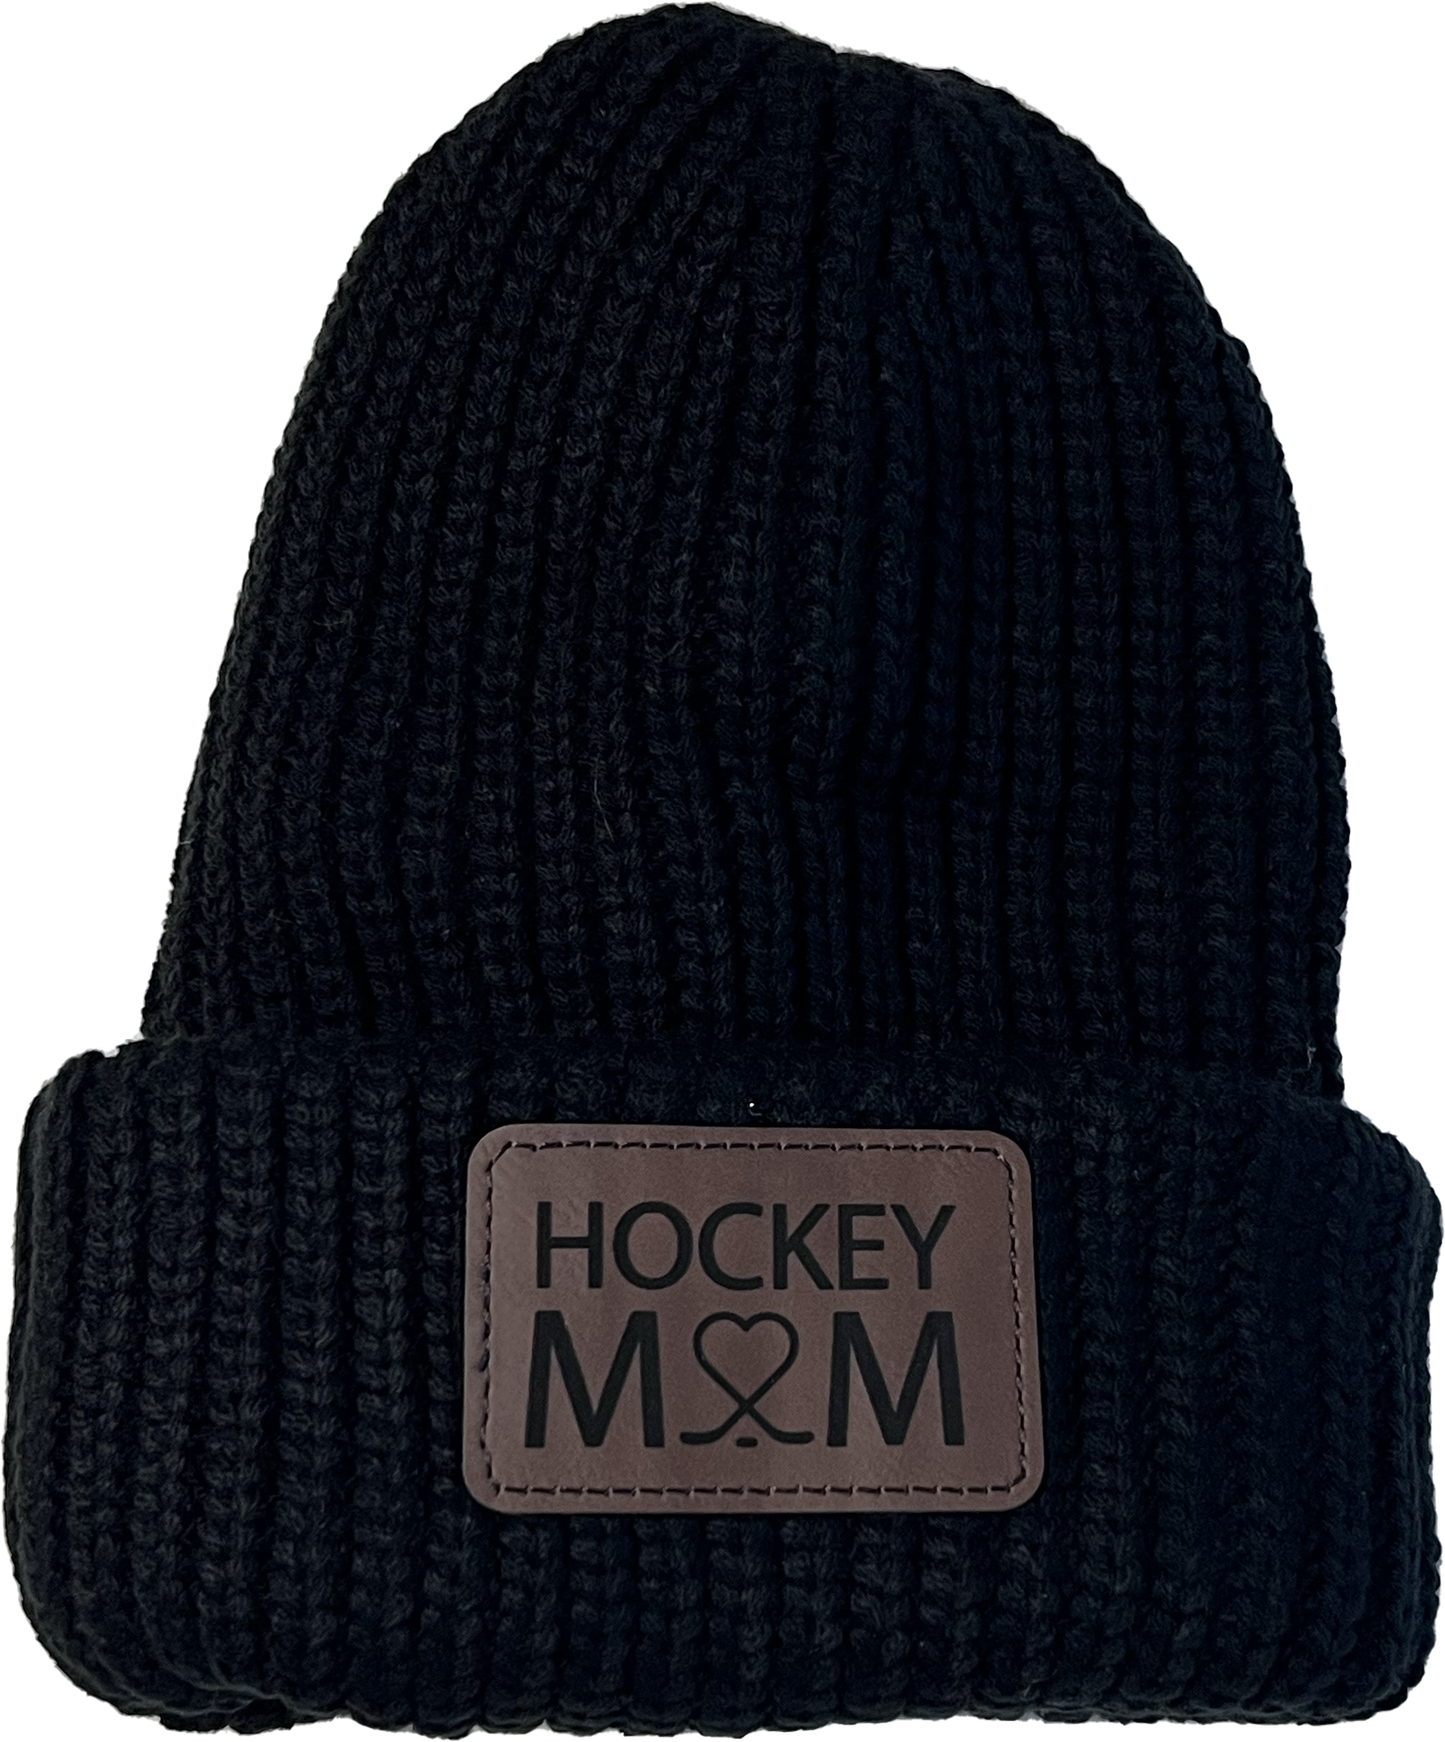 Hockey Mom Stocking Cap